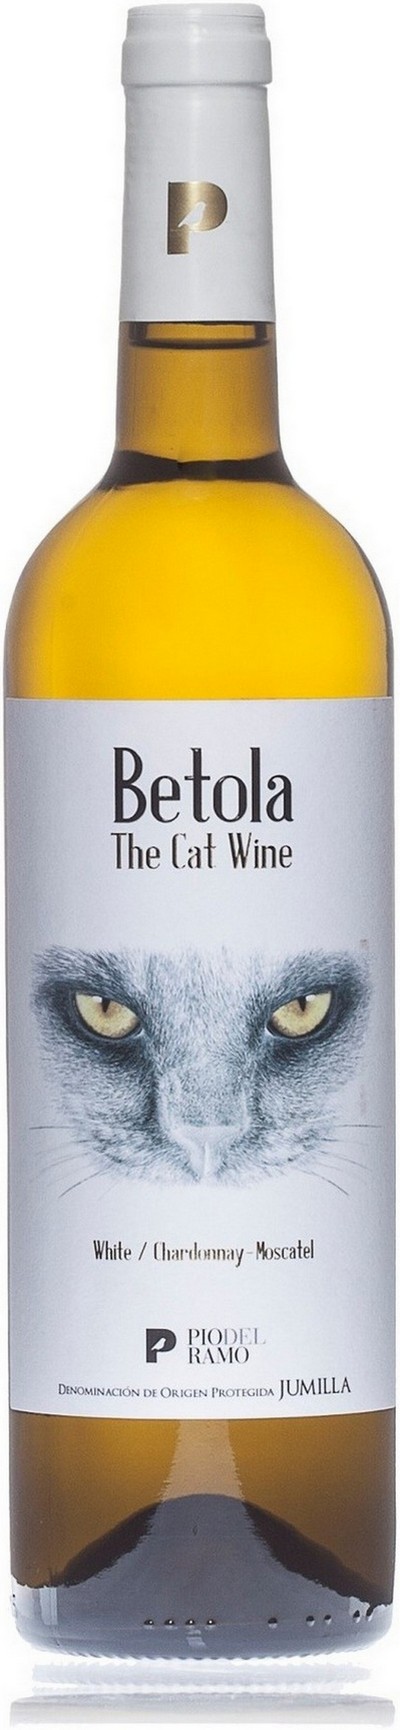 betola-the-cat-wine-white-ecologico-2020